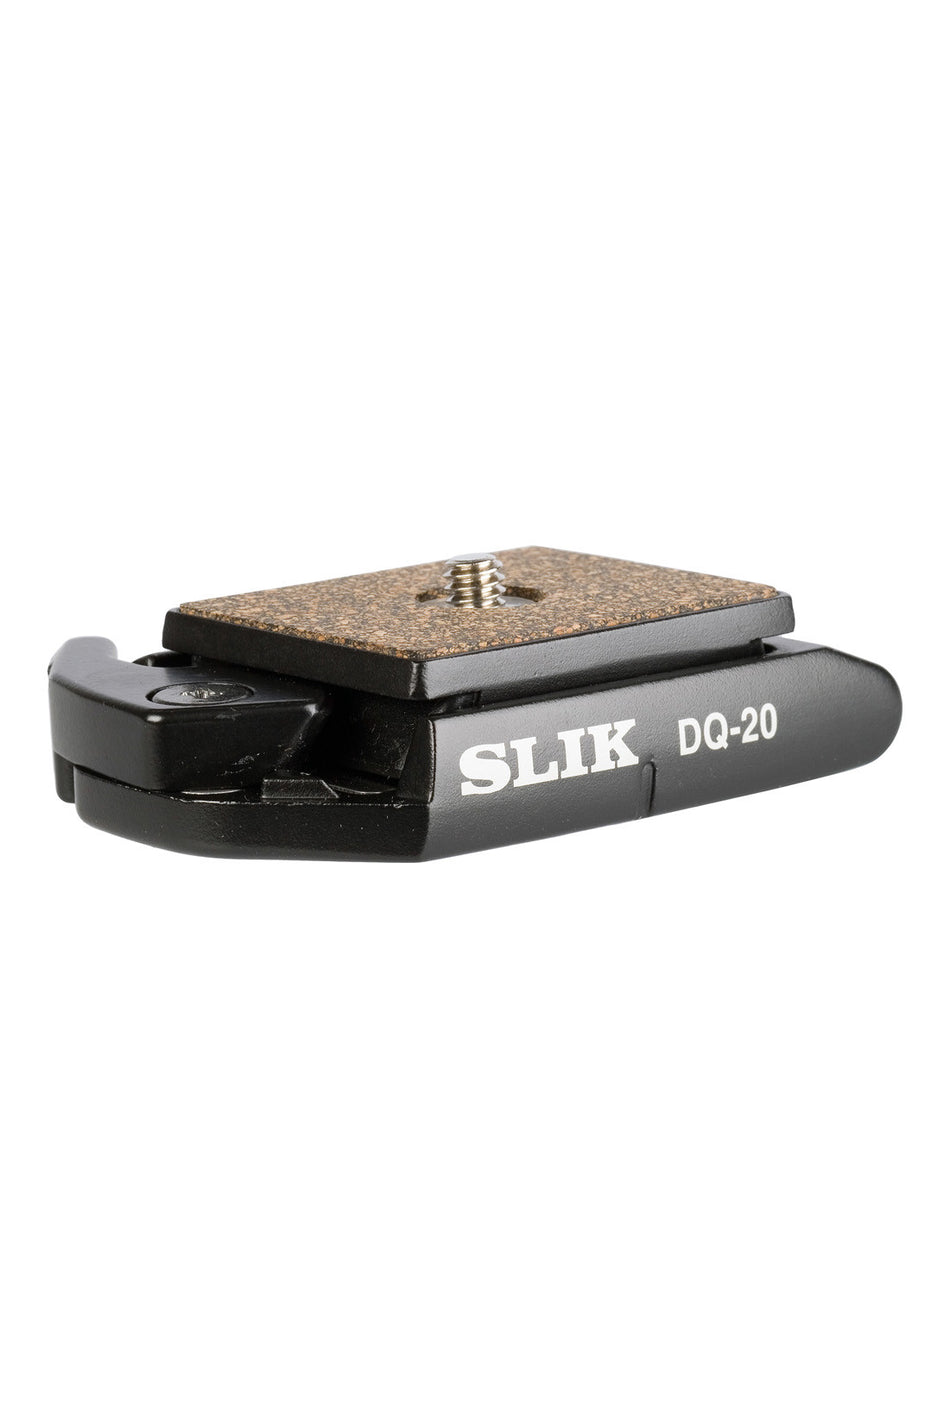 SLIK DQ-20 Quick Release Adapter (Large)